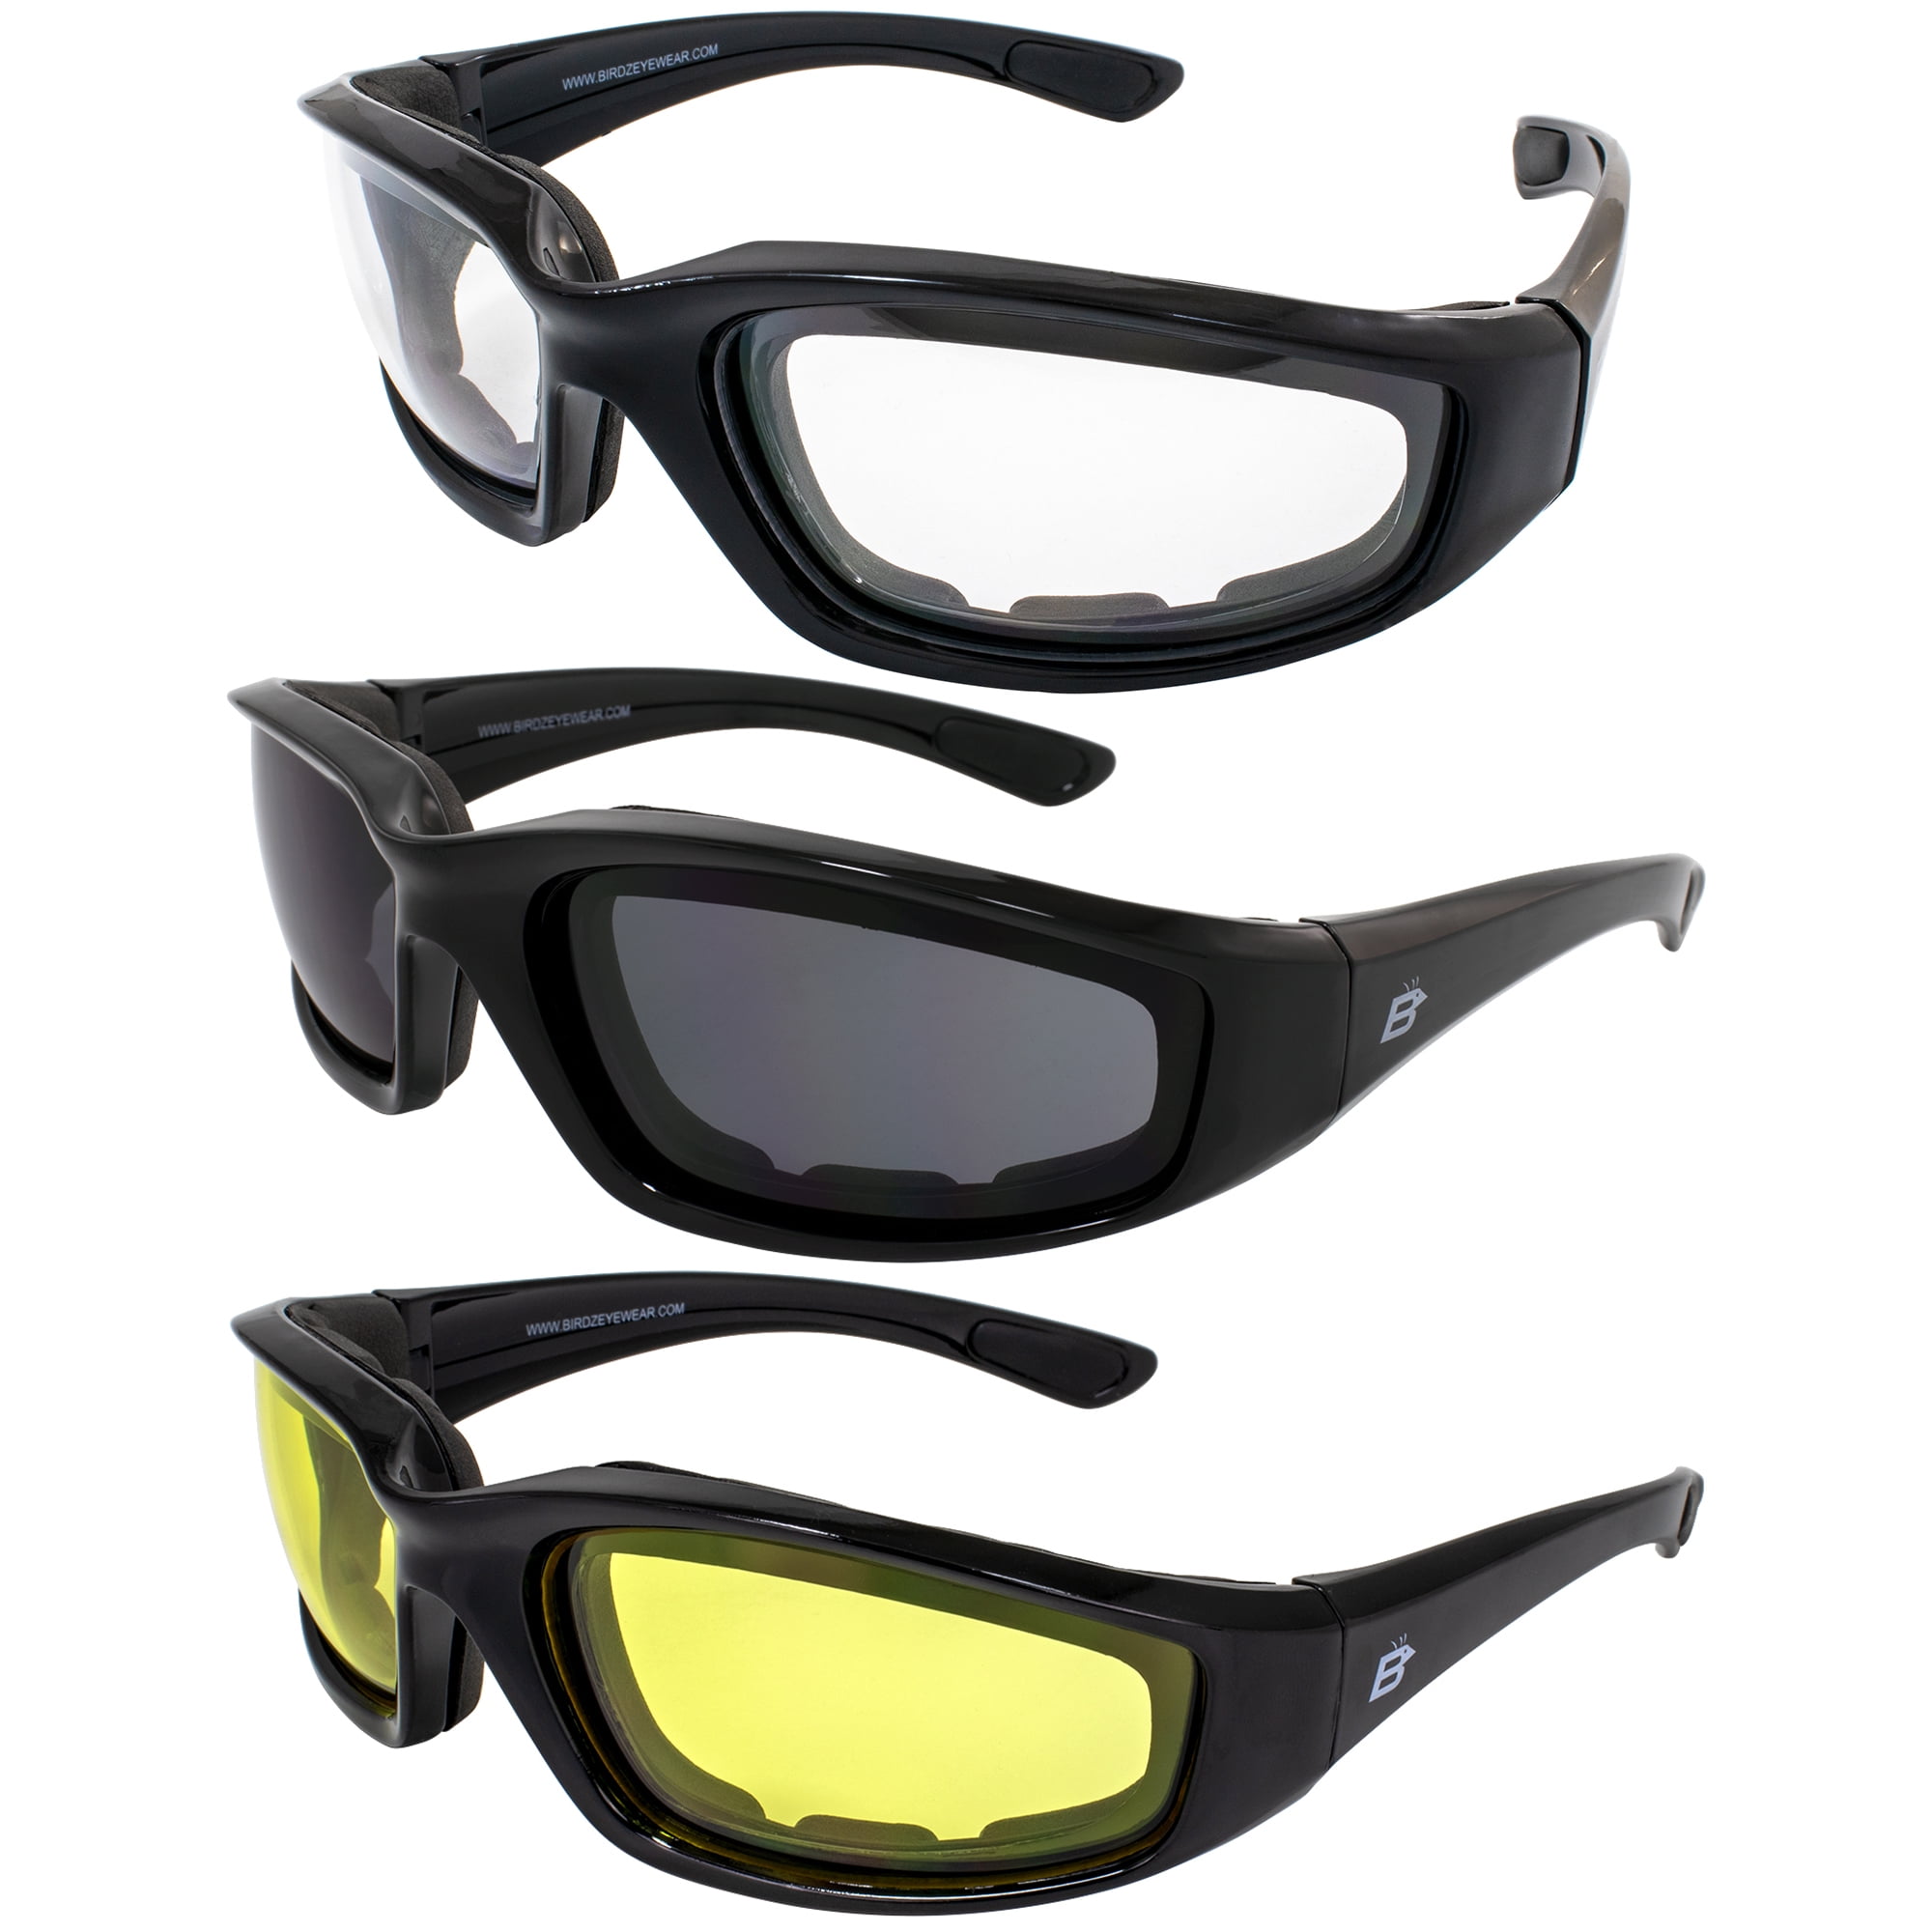 Motorcycle Goggles Glasses Sunglasses Padded Eva Foam Clear-Smoke-Yellow Lenses 